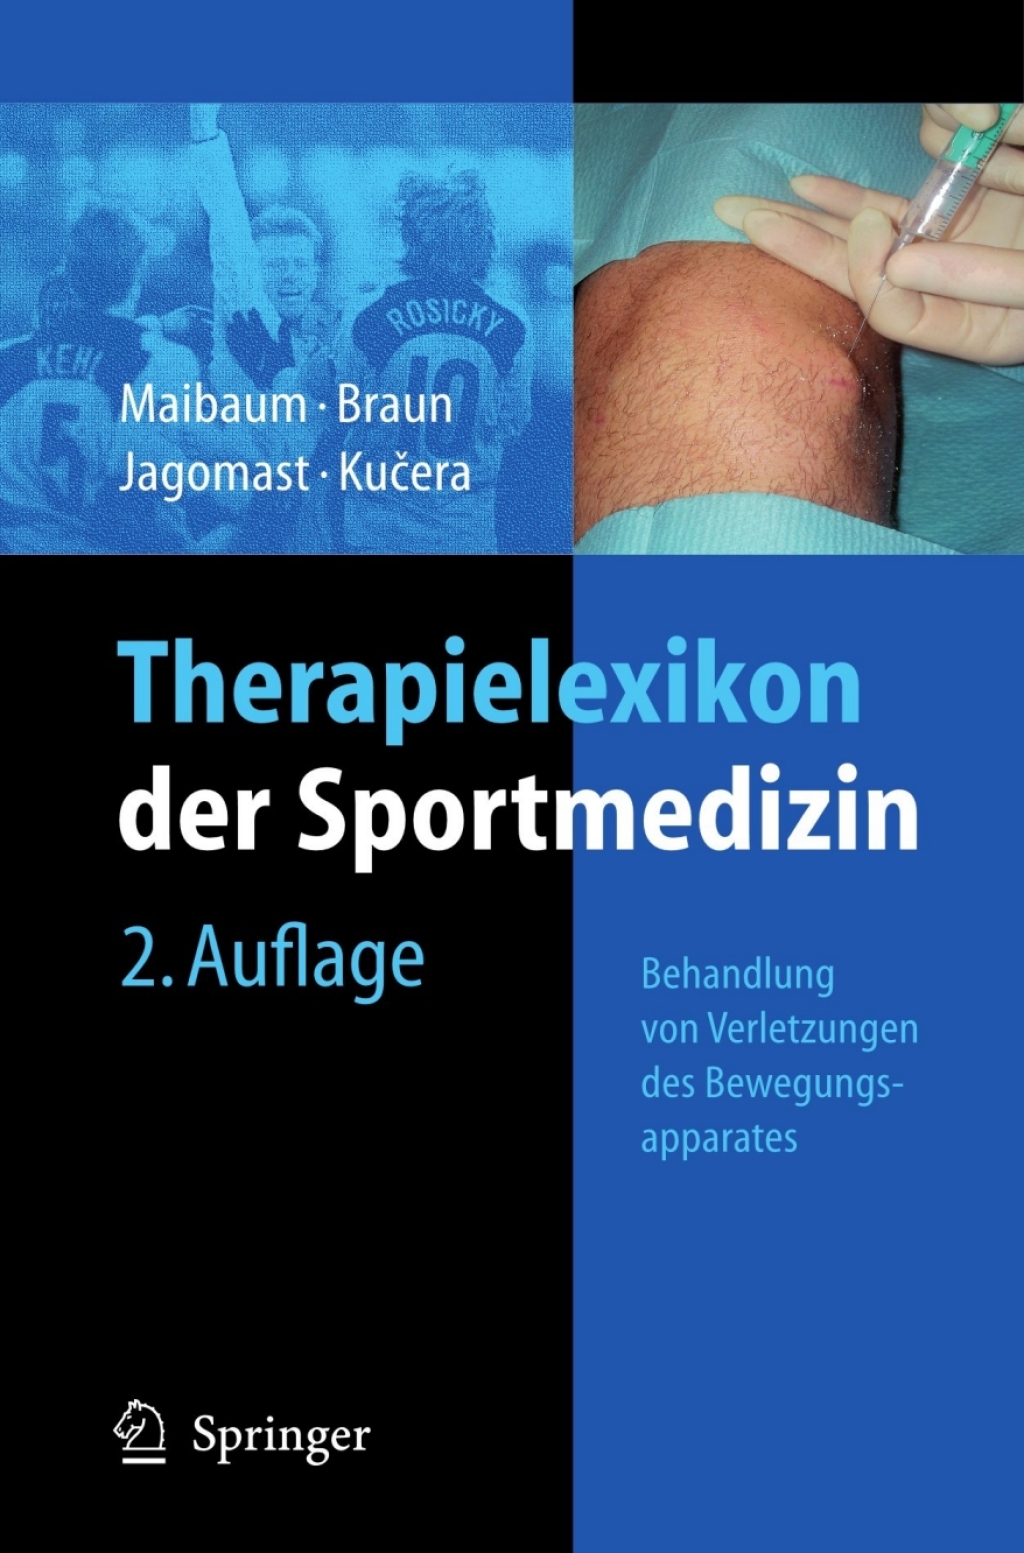 Therapielexikon der Sportmedizin - 2nd Edition (eBook)